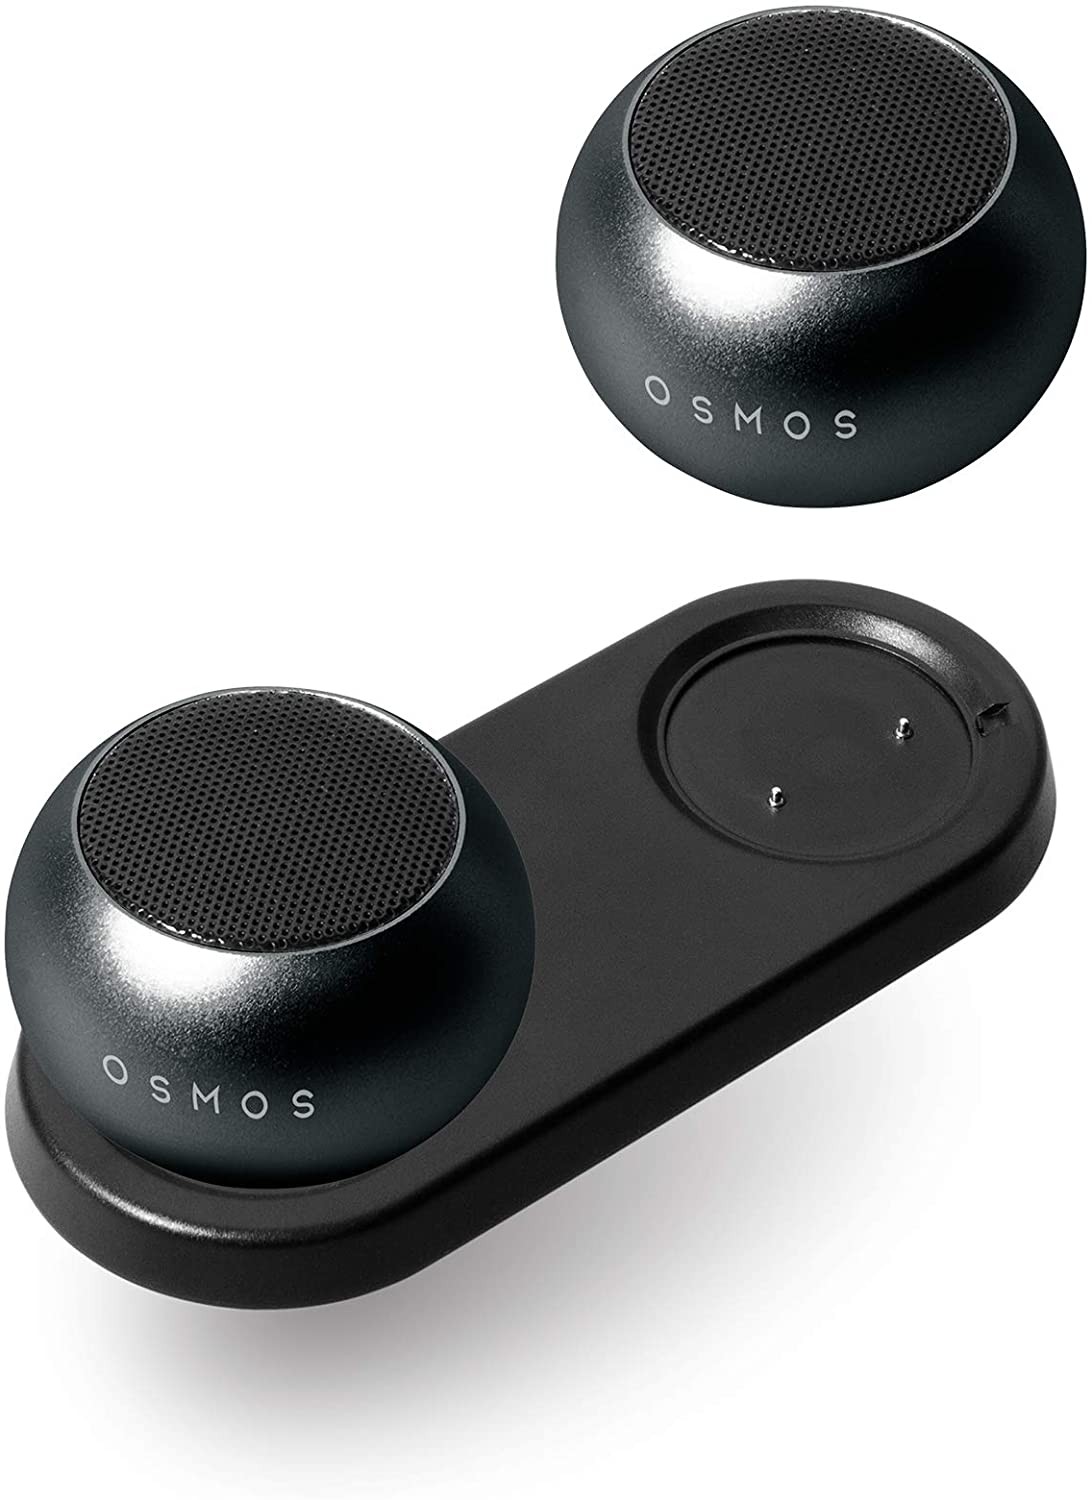 Mini Bluetooth Speaker Set-Metal, Portable, Wireless, Powerful USB Stereo Speakers + Charging Dock